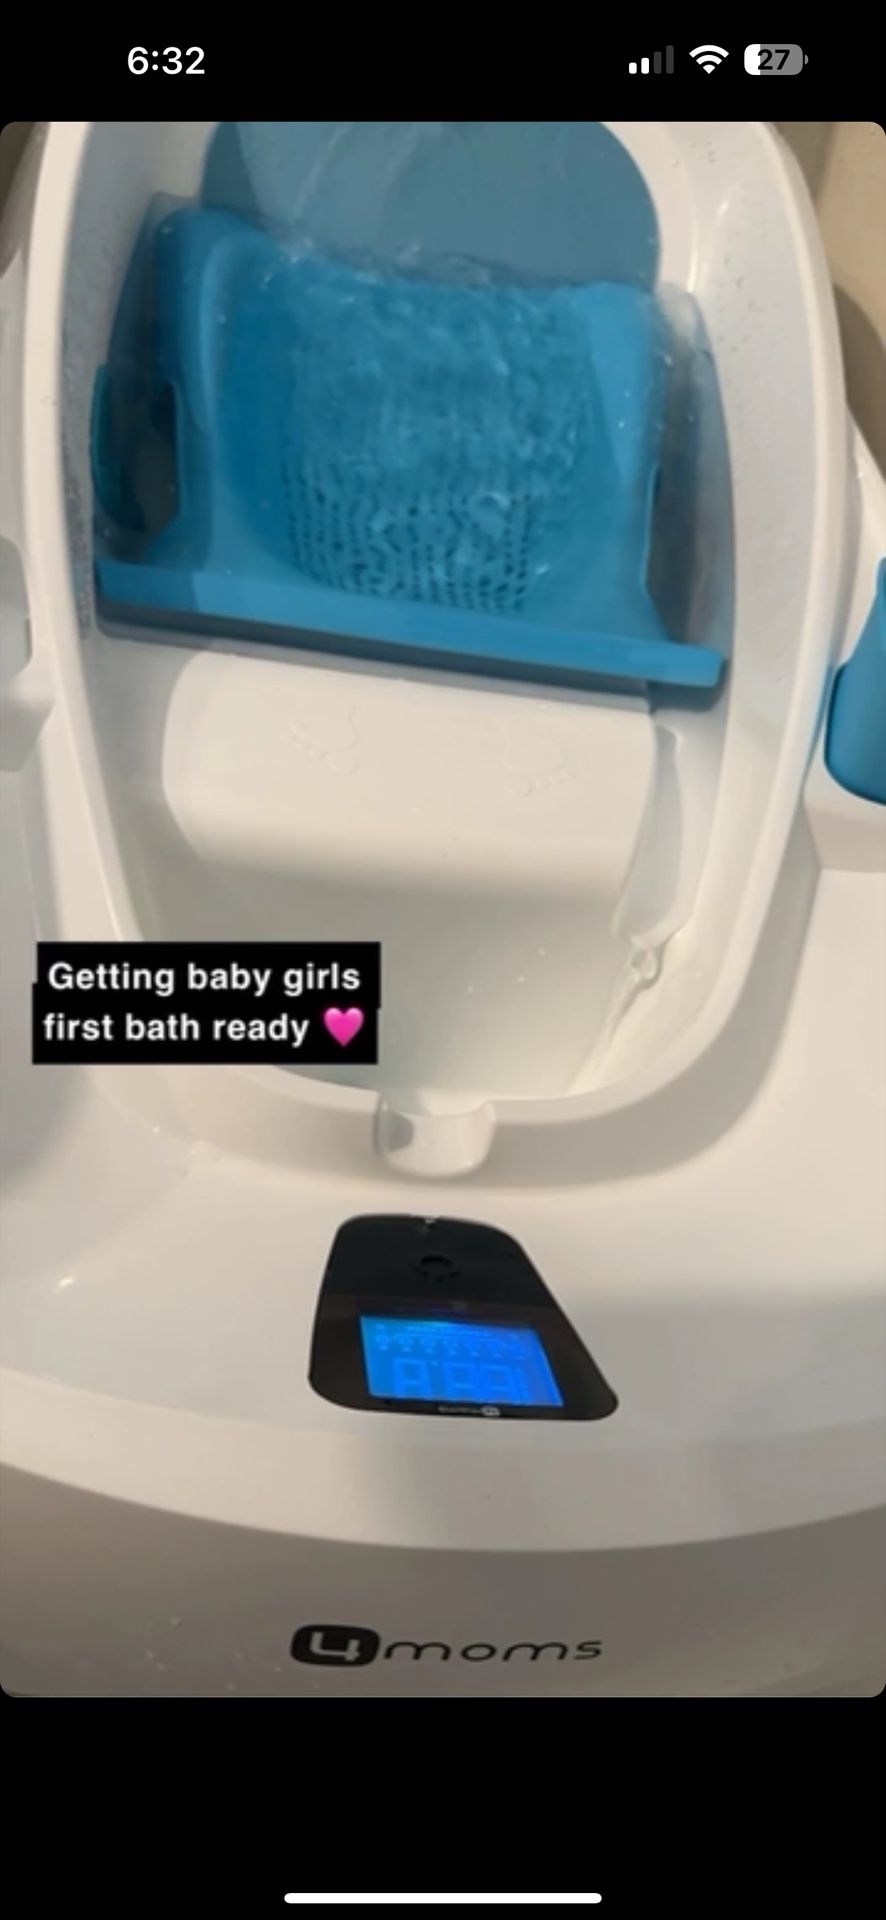 4moms Baby Bathtub